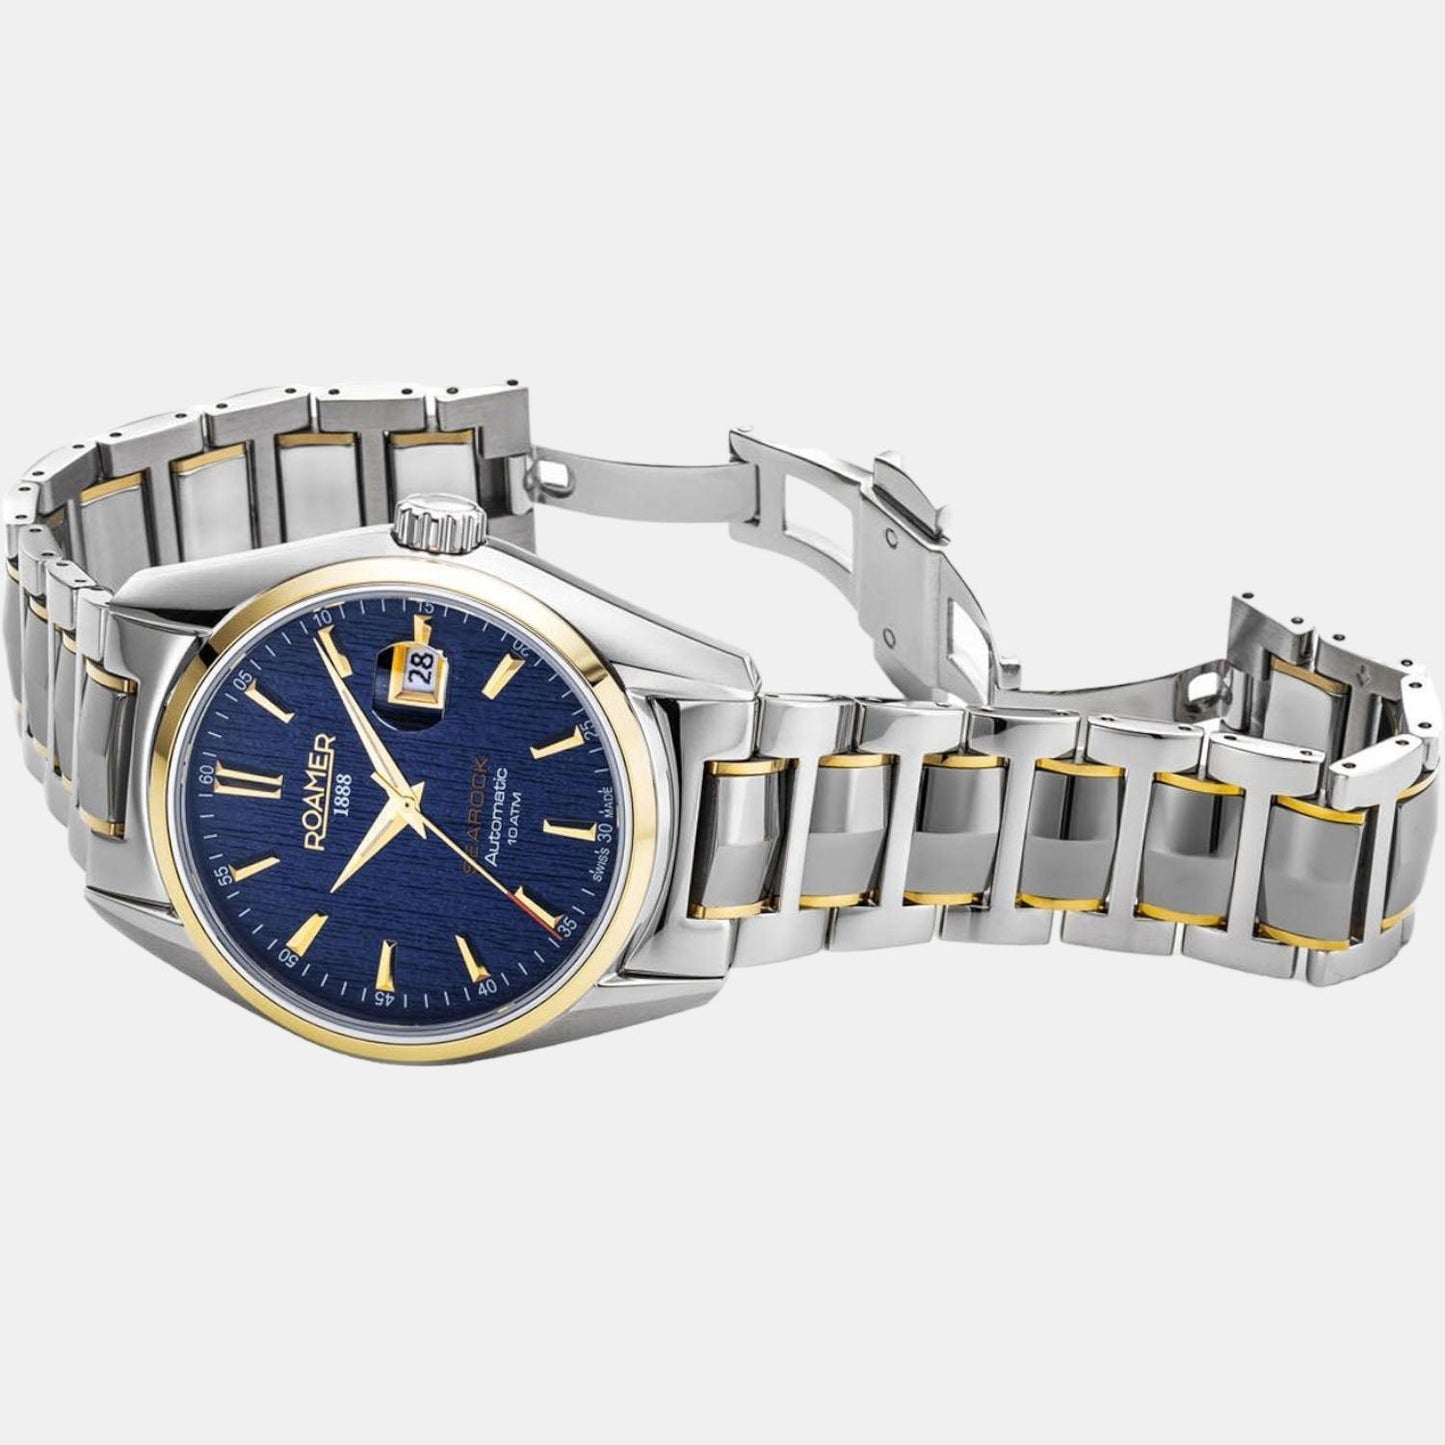 roamer-stainless-steel-blue-analog-men-watch-210665-47-45-20